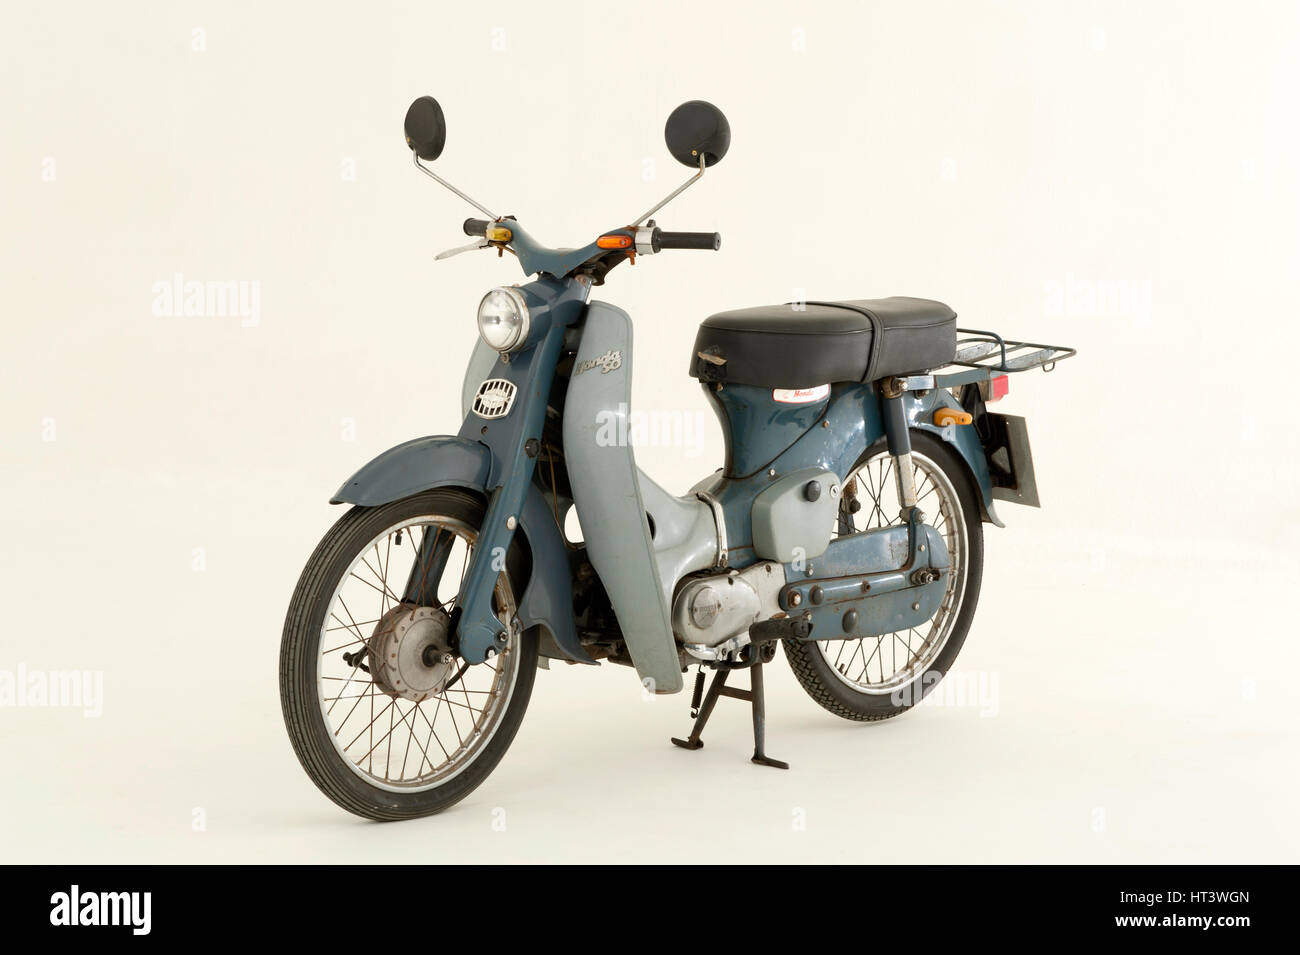 Honda c50 motorbike hi-res stock photography and images - Alamy